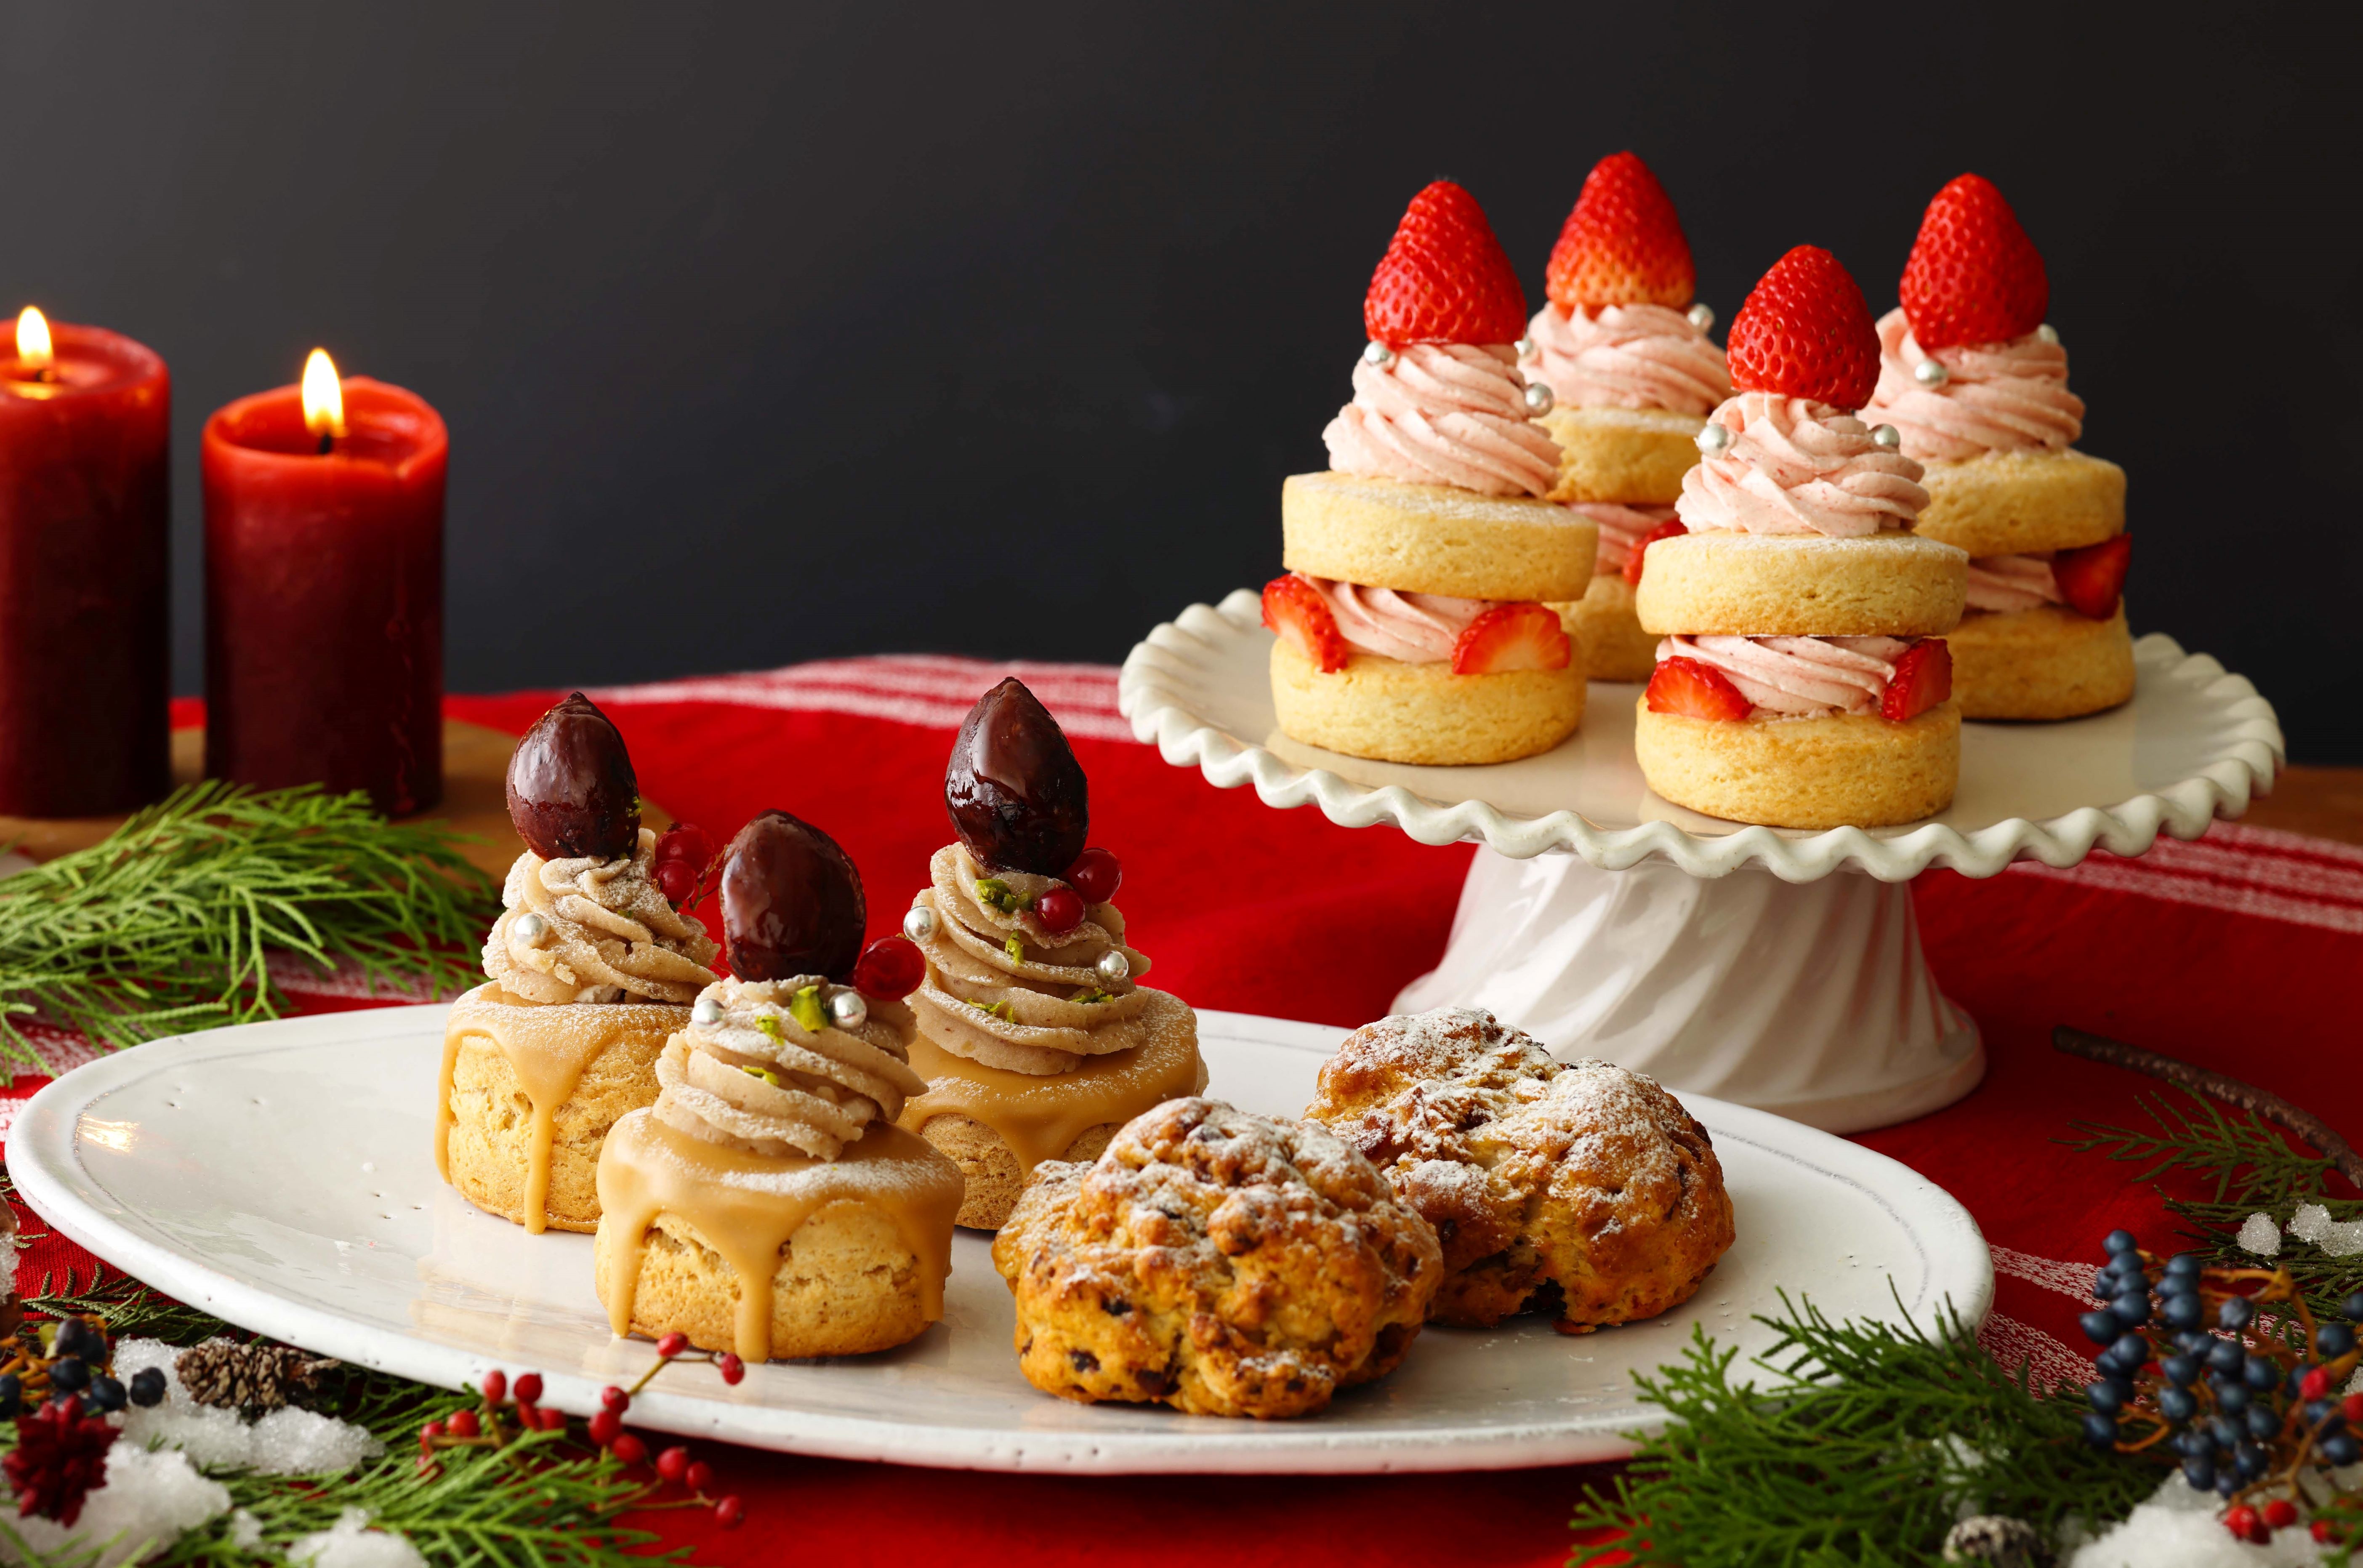 【BAKERS gonna BAKE】新作「クリスマスモンブラン」や、リニューアルした苺のスコーンサンドが登場！焼き芋と発酵バターを大胆にサンドした冬限定商品ものサブ画像1